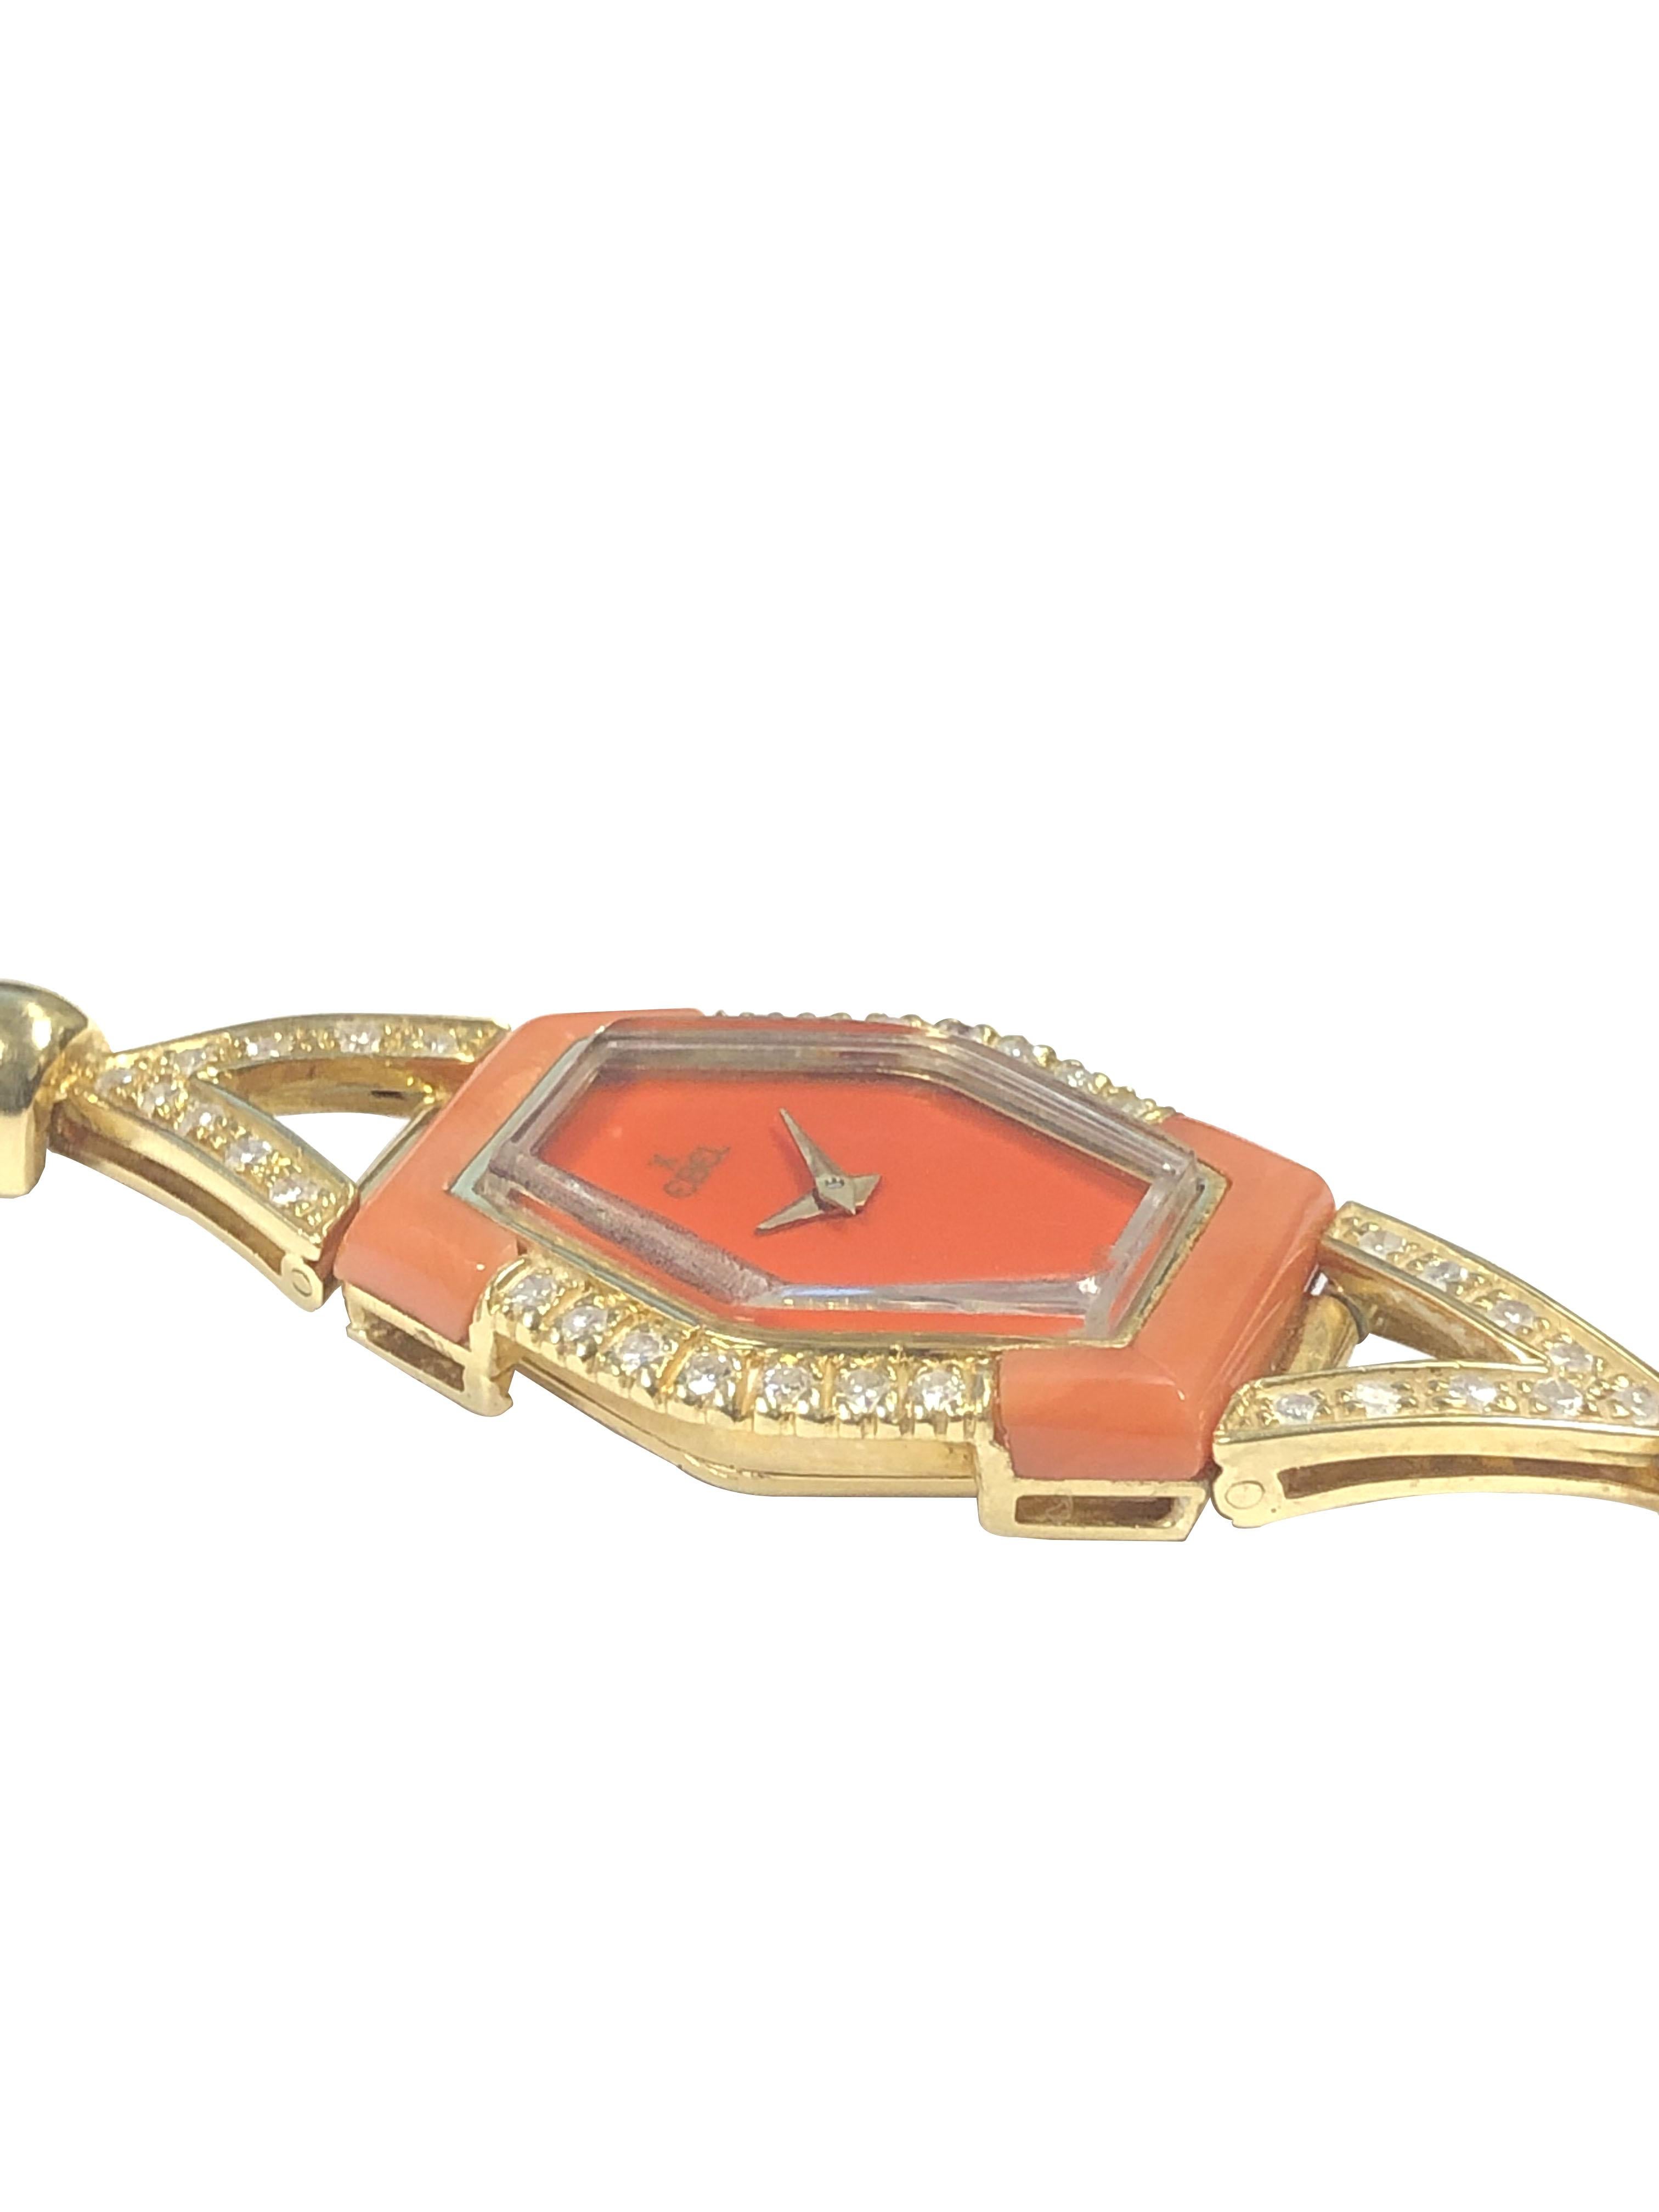 Single Cut Ebel 1970s Yellow Gold Coral and Diamond Ladies mechanical Bracelet Watch